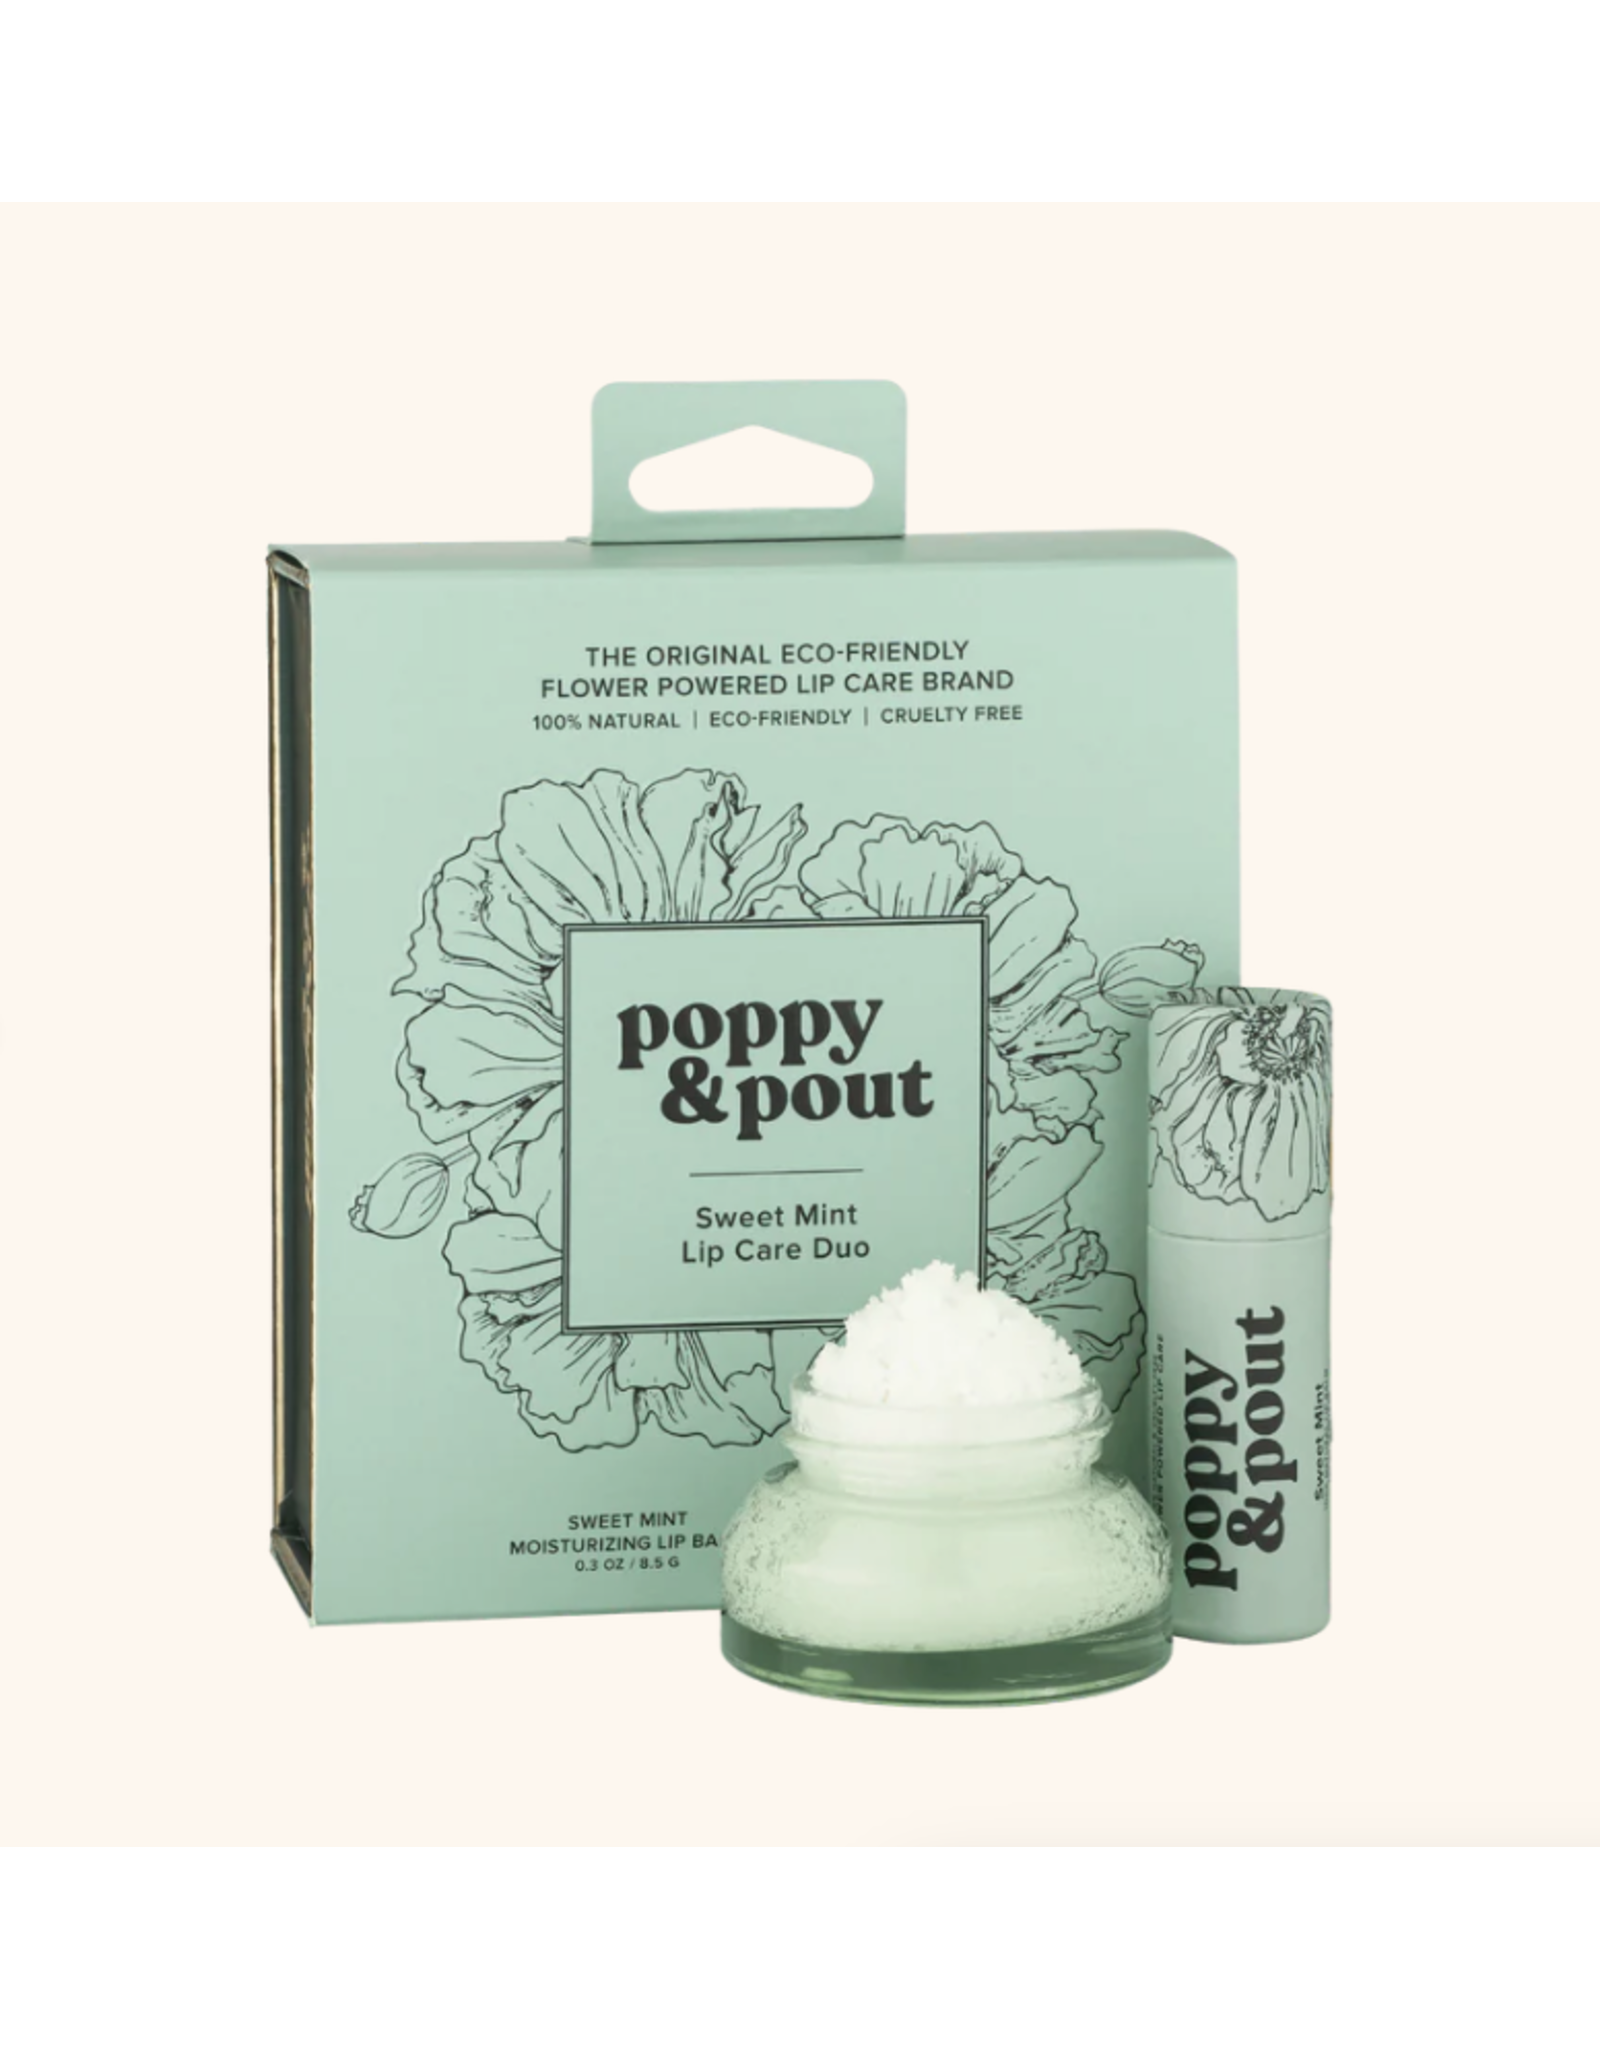 Poppy & Pout Sweet Mint Lip Care Duo